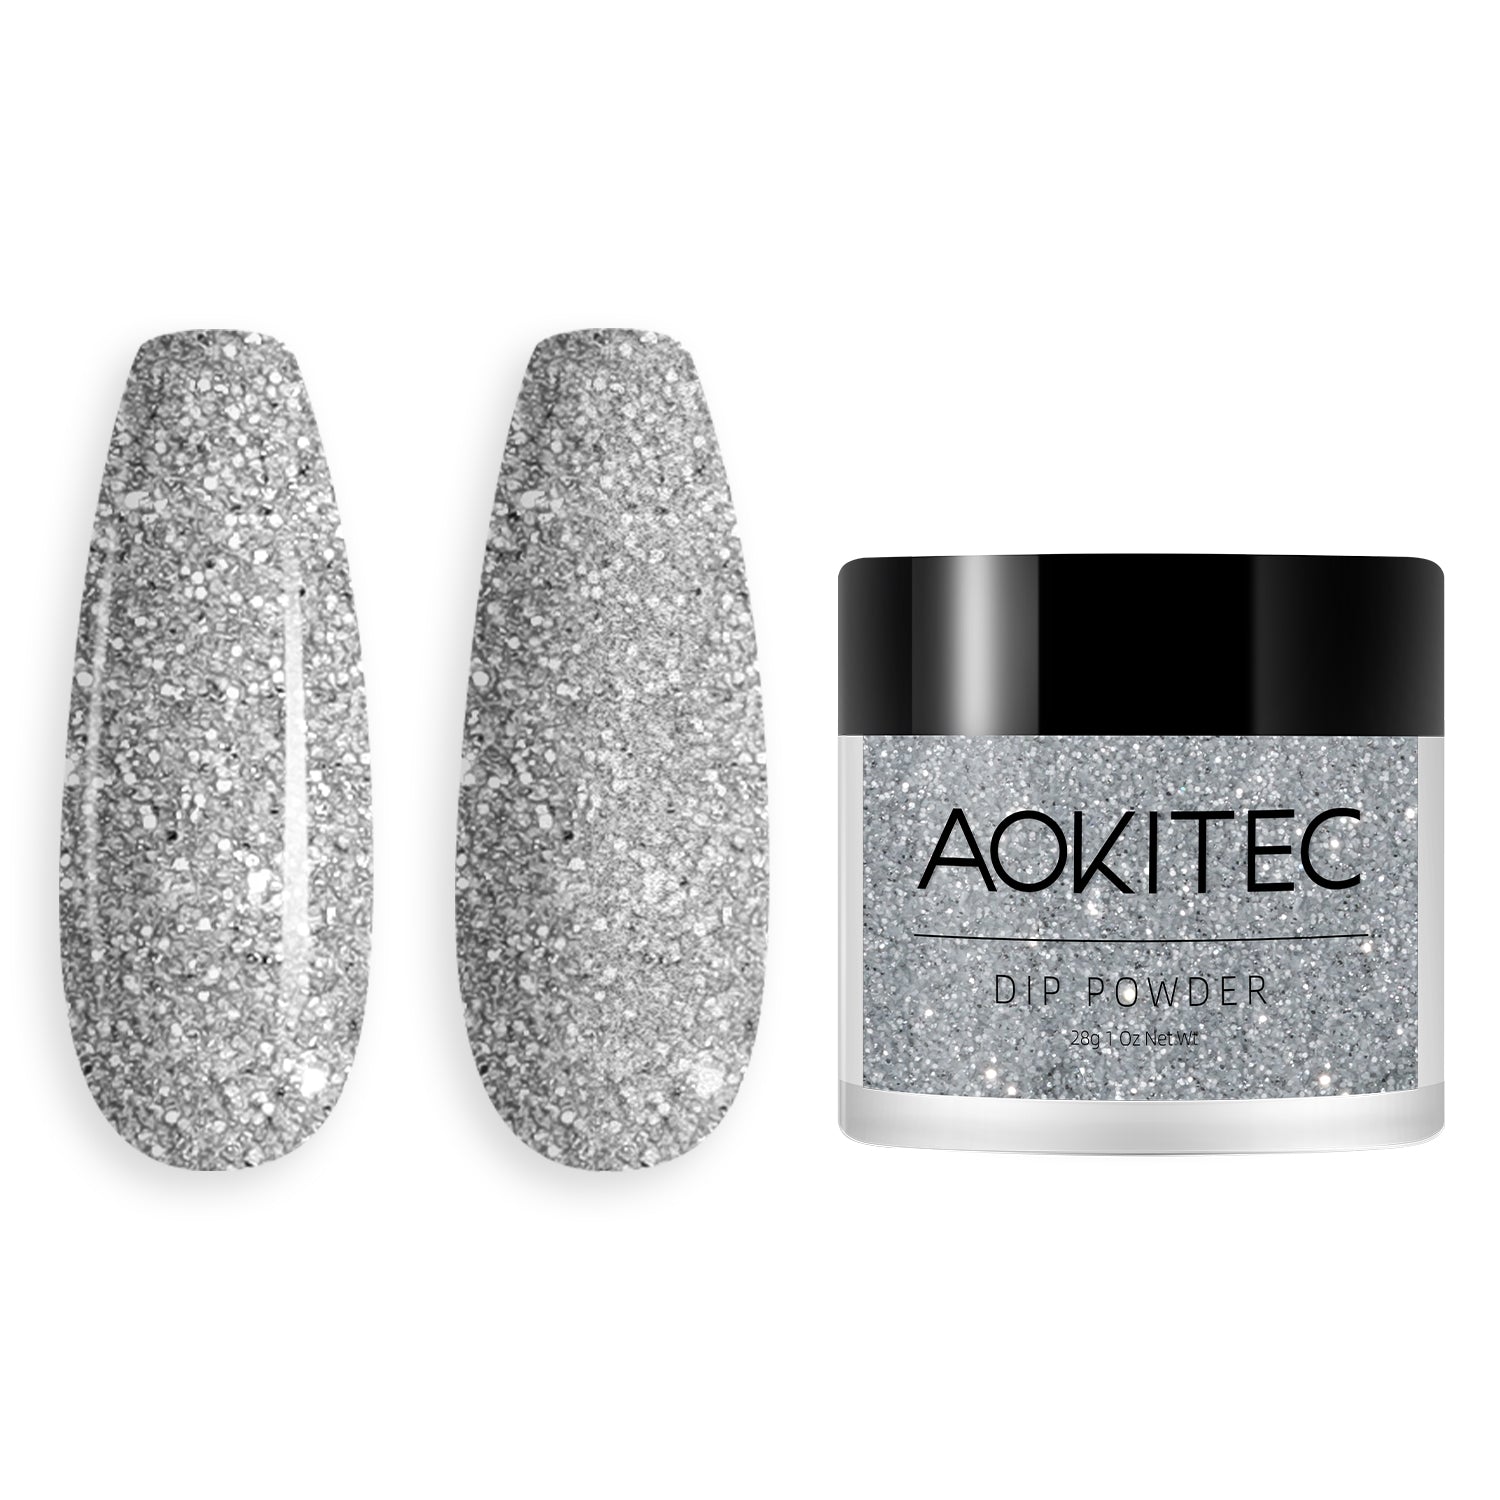 Aokitec Glitter SILVER-DIP Powder 1oz